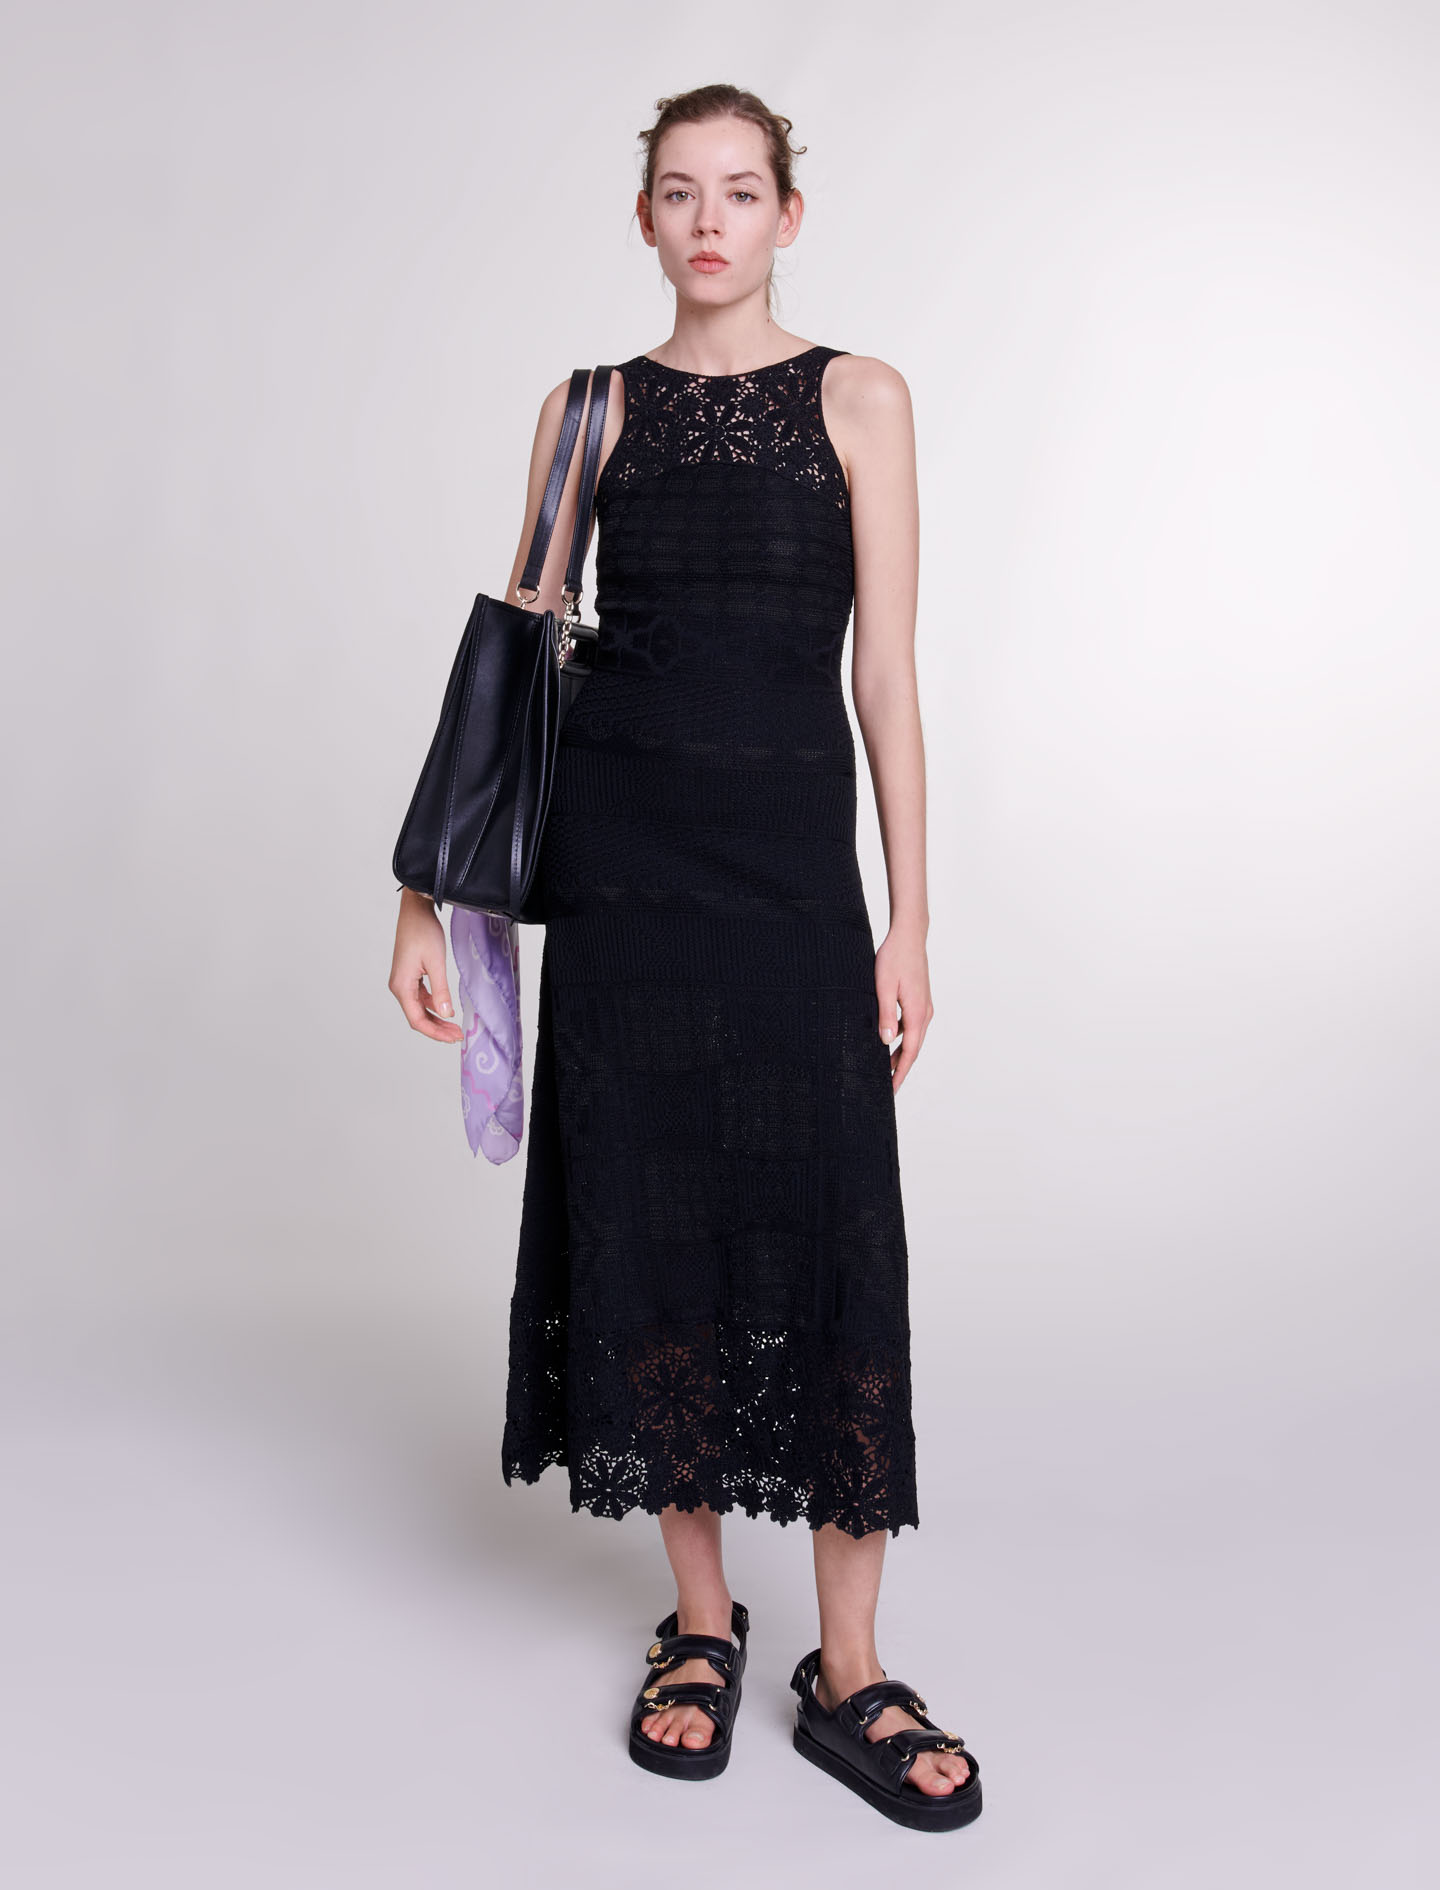 Maje Woman's viscose, Crochet-knit maxi dress for Spring/Summer, in color Black / Black